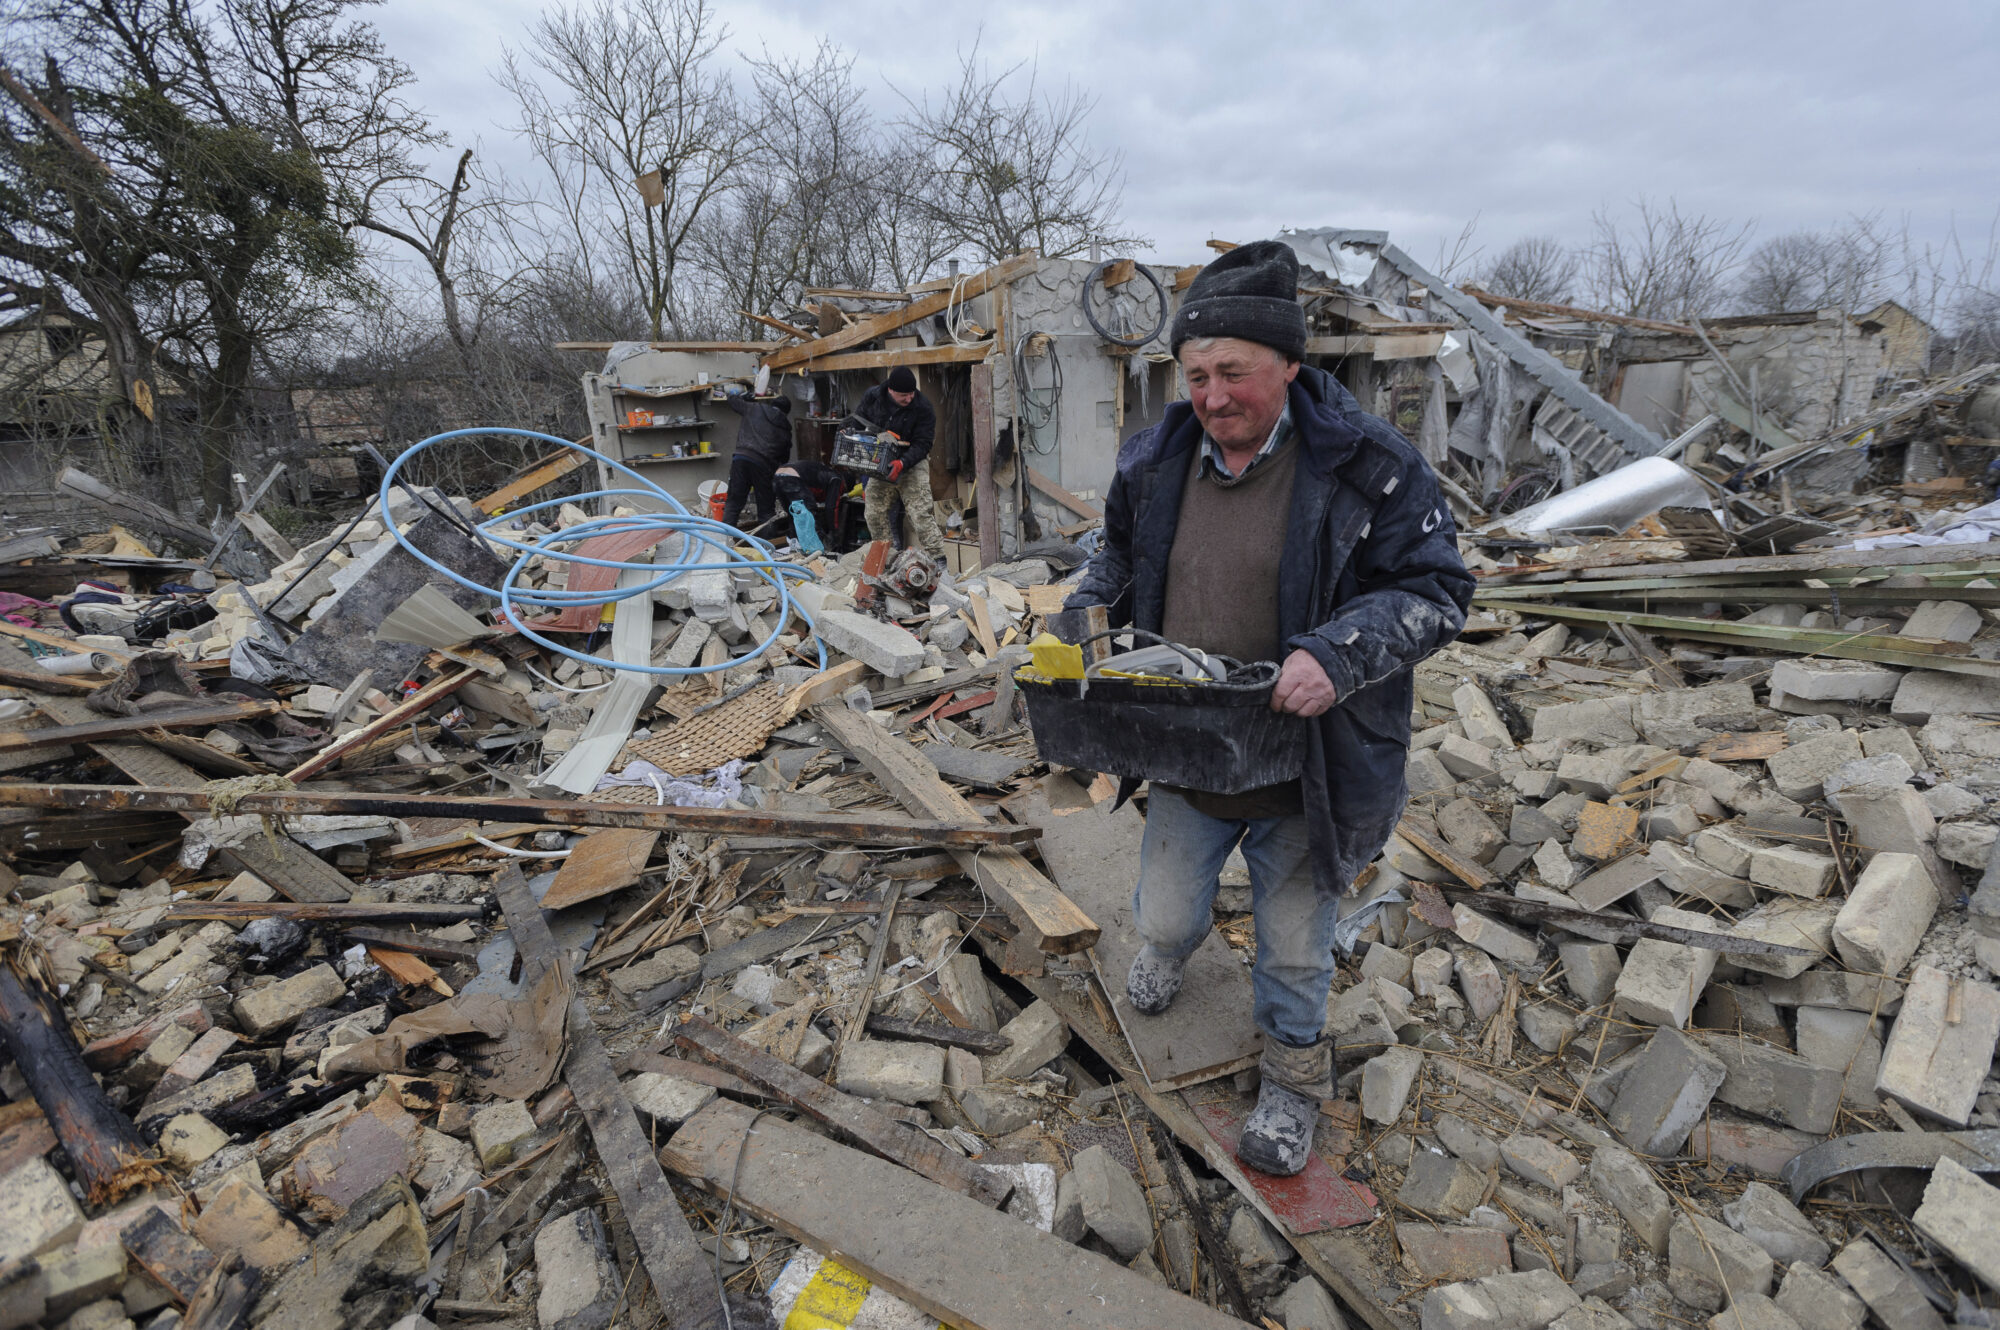 Mann ryddar rundt utbomba hus